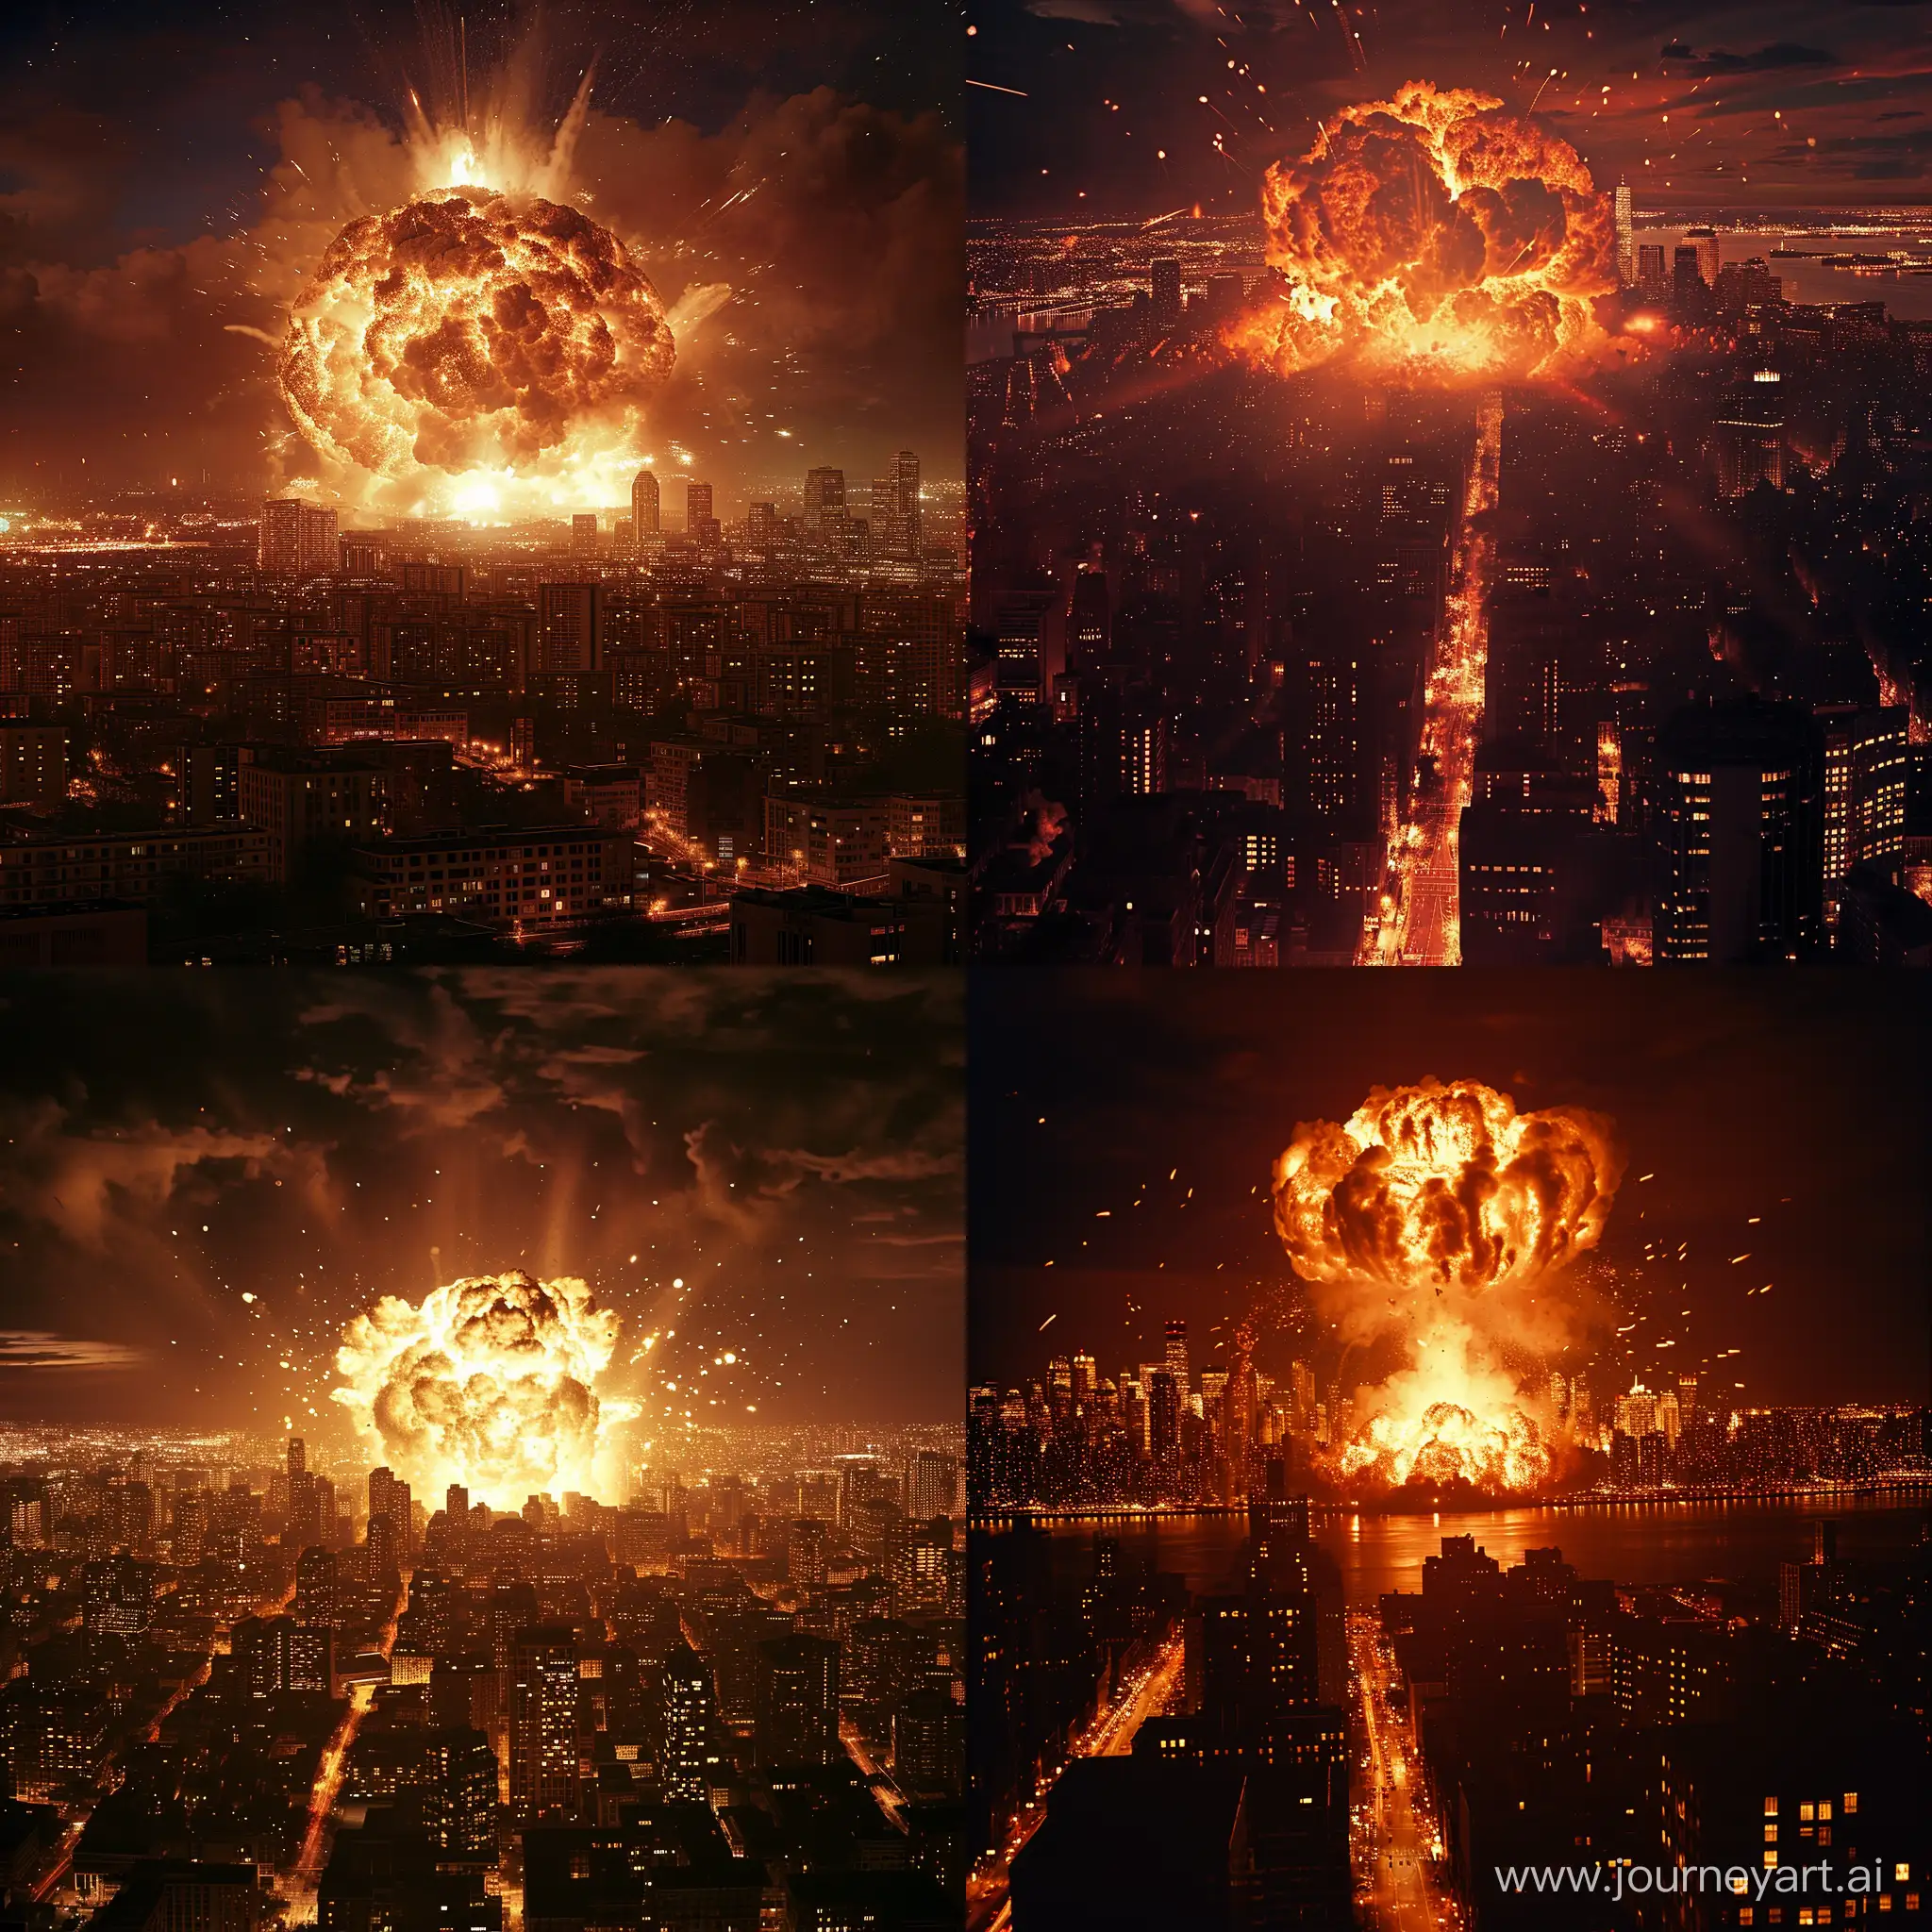 Nighttime-Urban-Destruction-Powerful-Nuclear-Explosion